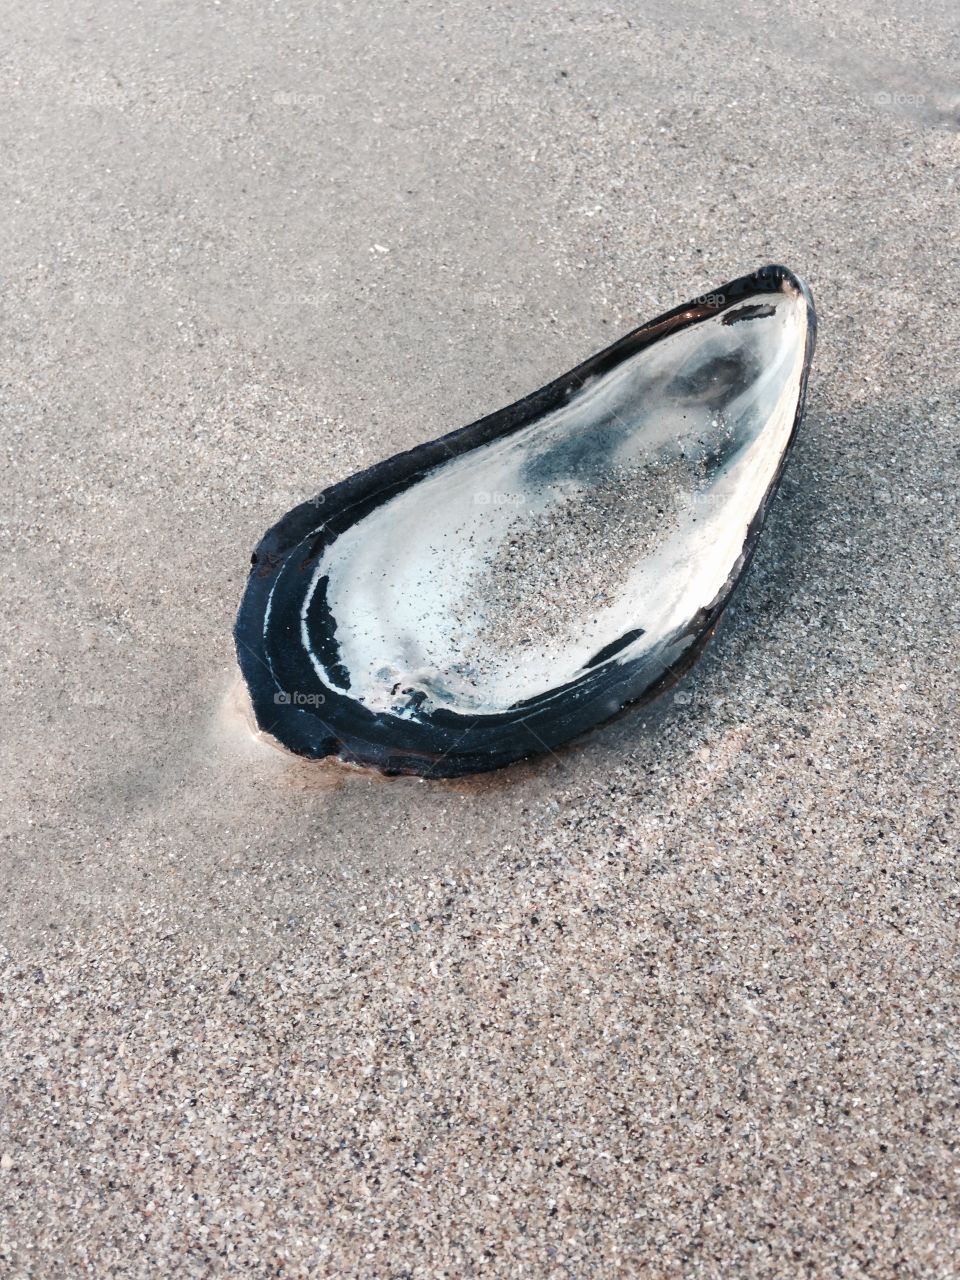 Sands of time. A beautiful sea shell on the Maine coast